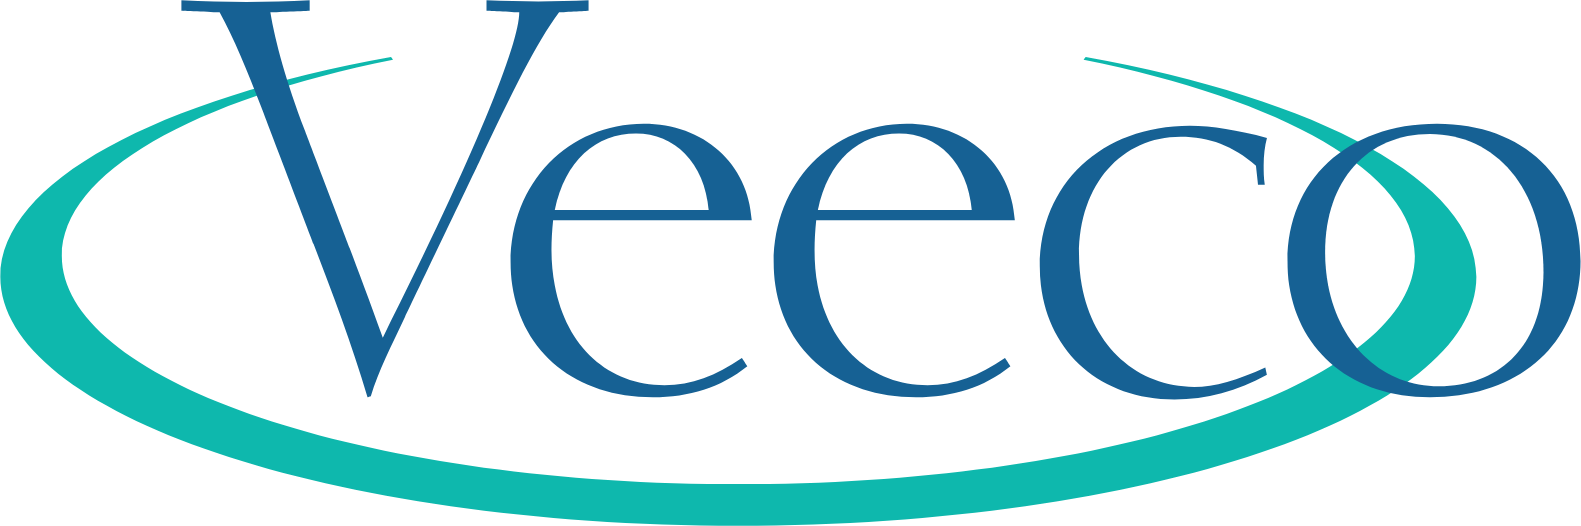 Veeco
 logo (transparent PNG)